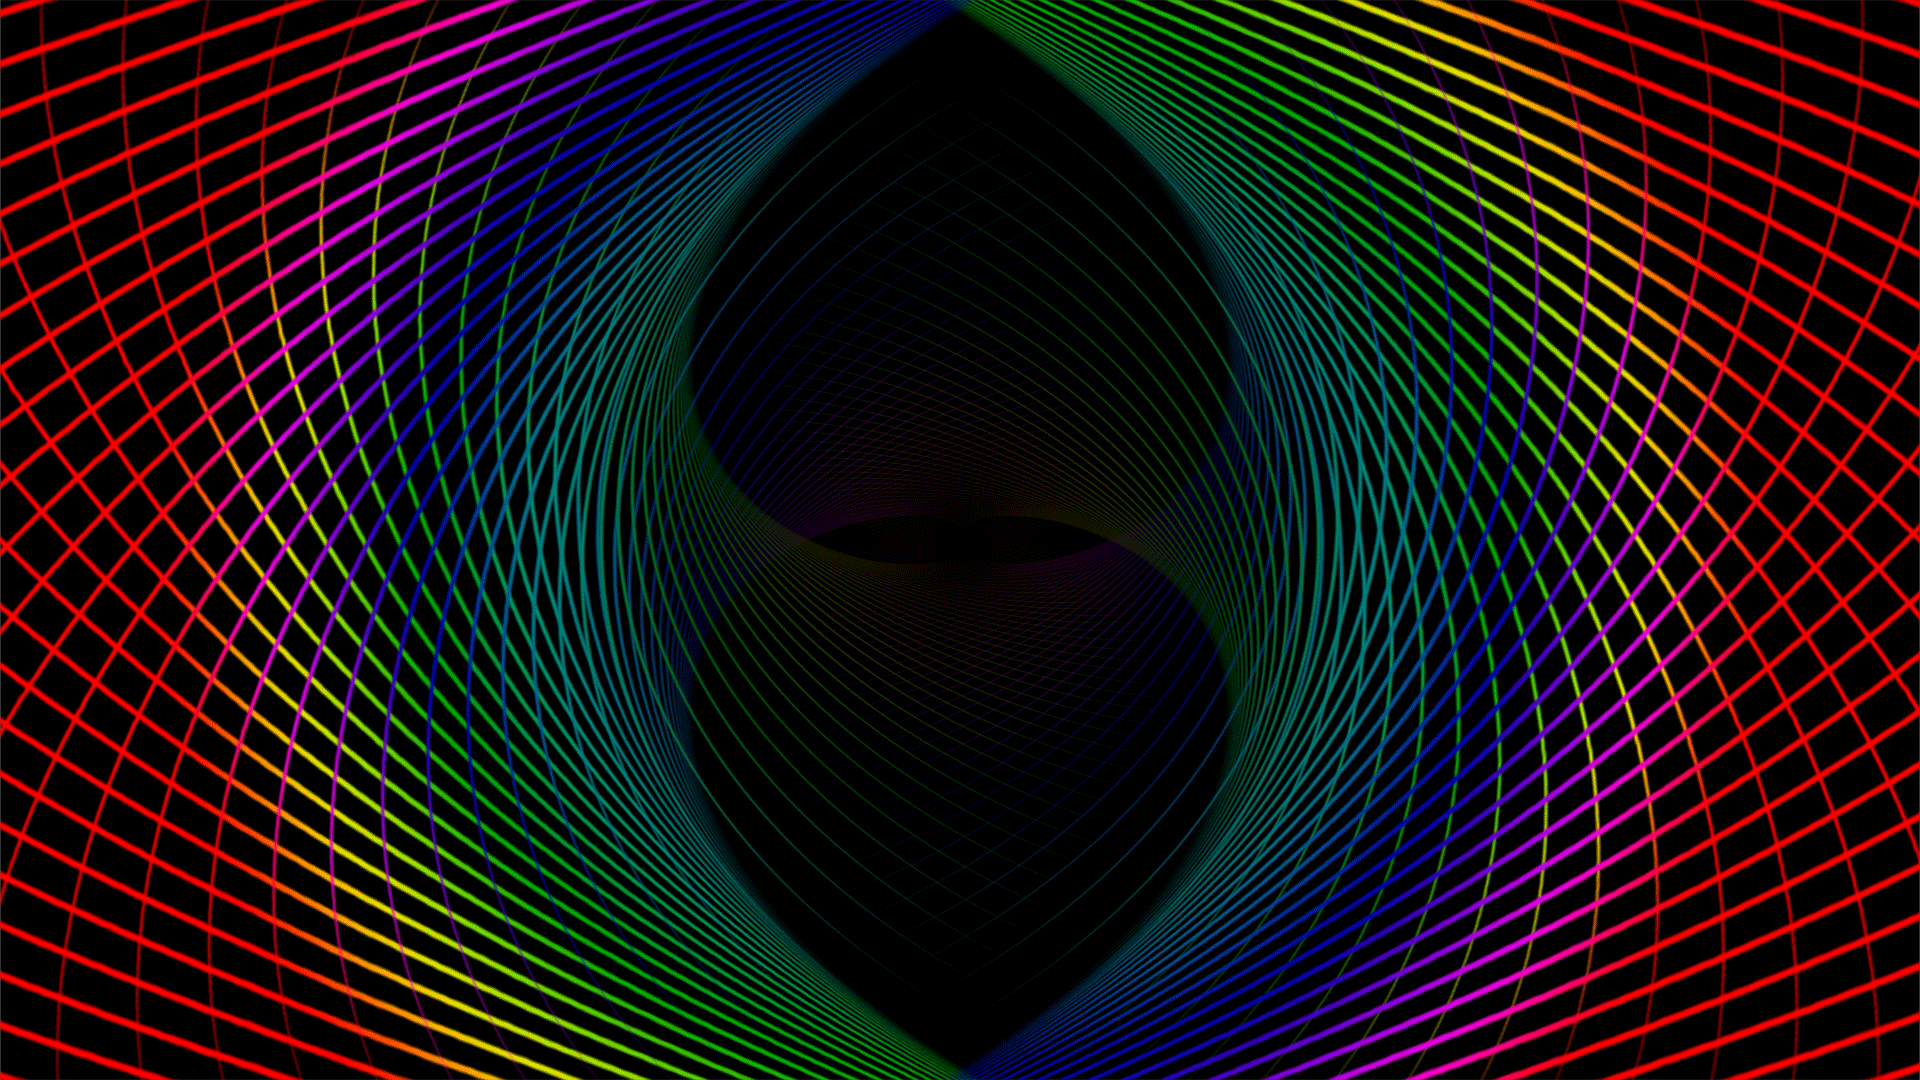 spiral anim 21 by lordsqueak on deviantart illusion gif illusions abstract art medium